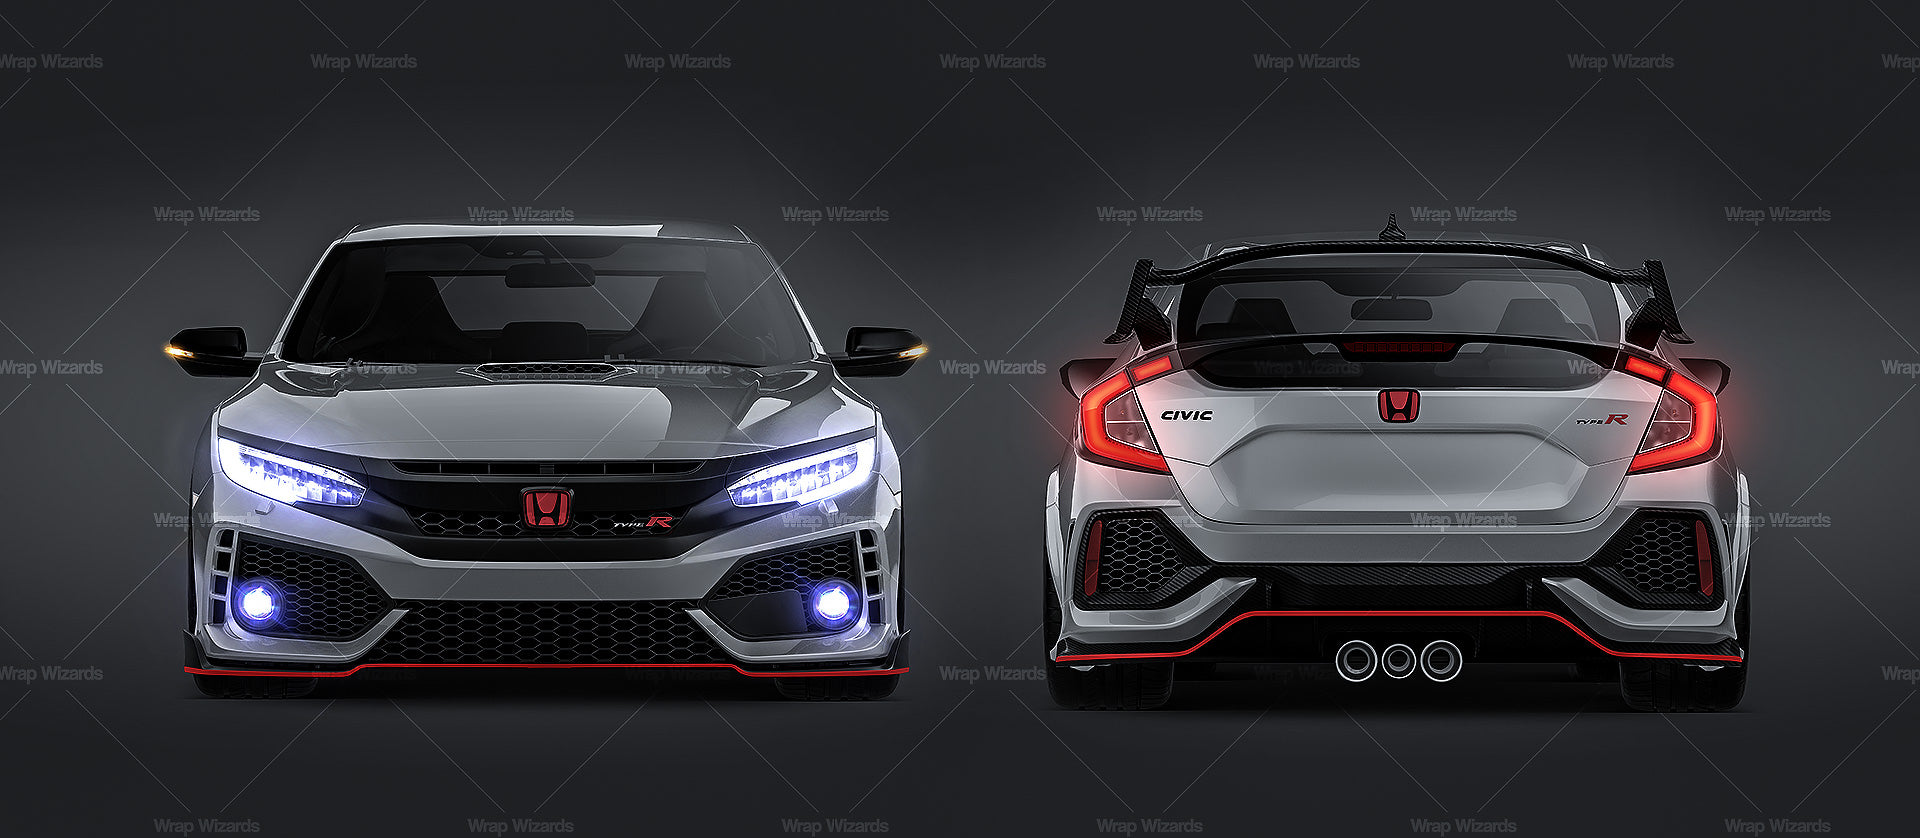 Honda Type-R 2019 - Car Mockup